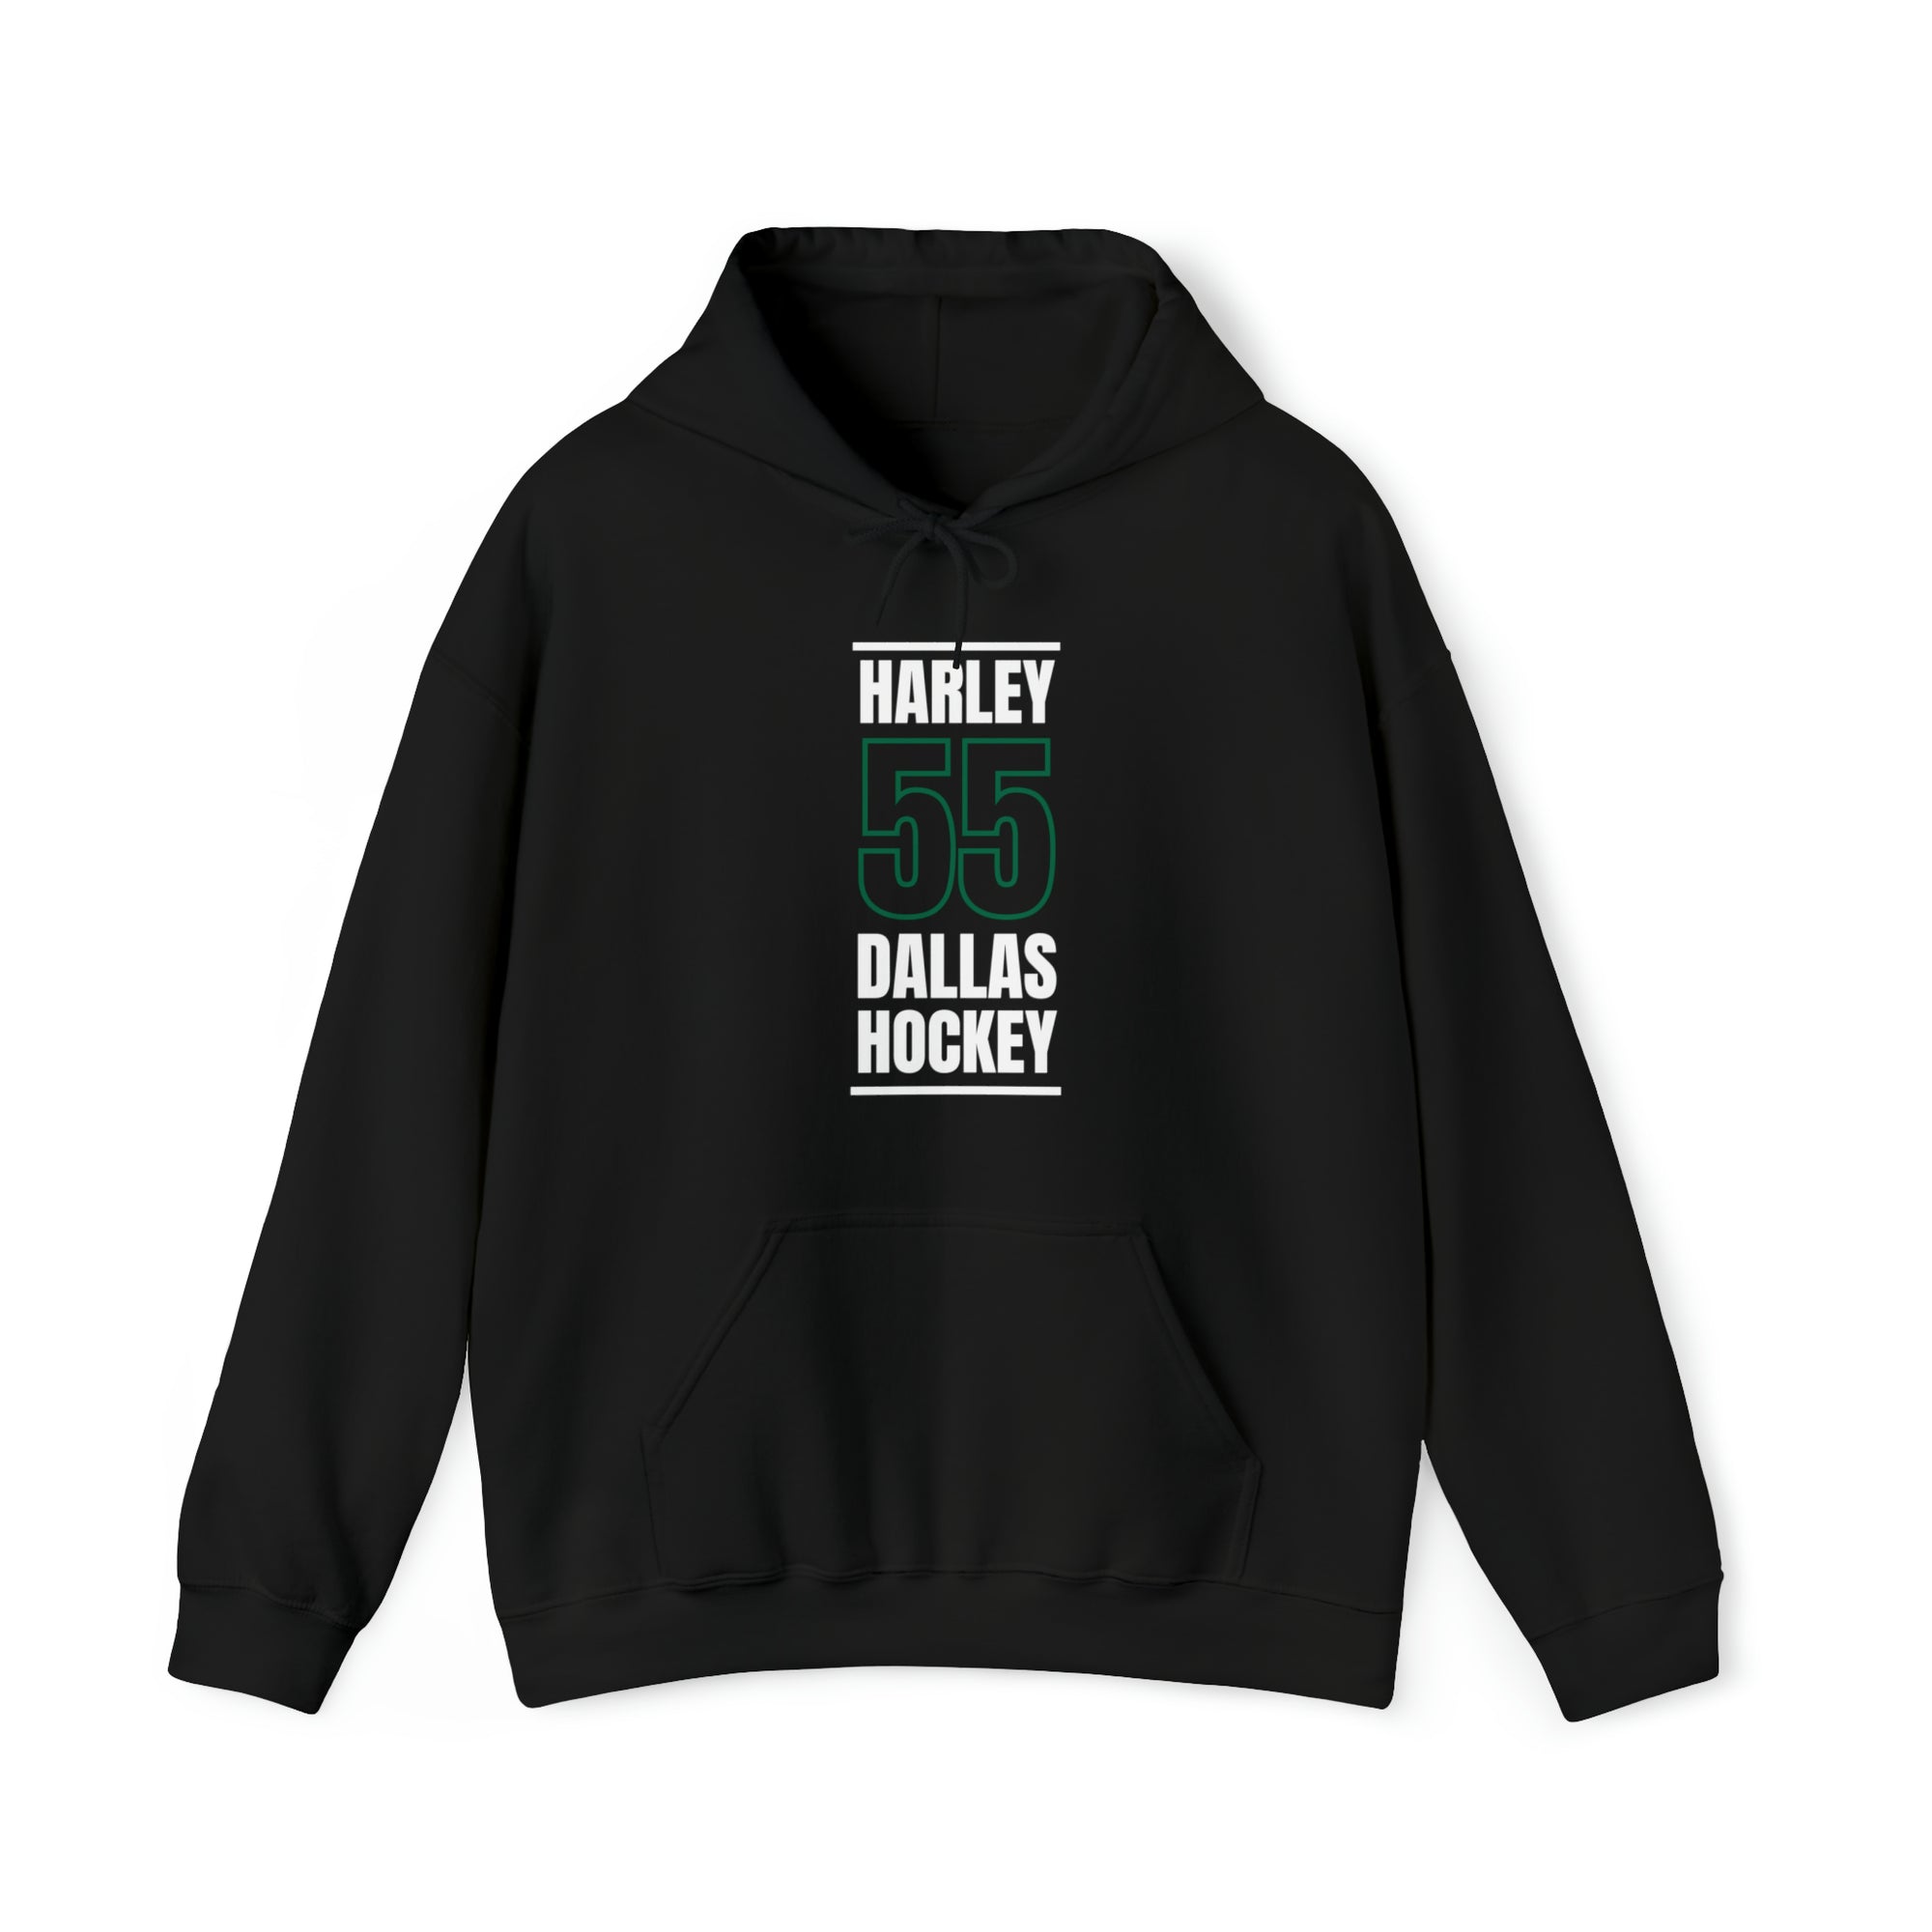 Harley 55 Dallas Hockey Black Vertical Design Unisex Hooded Sweatshirt